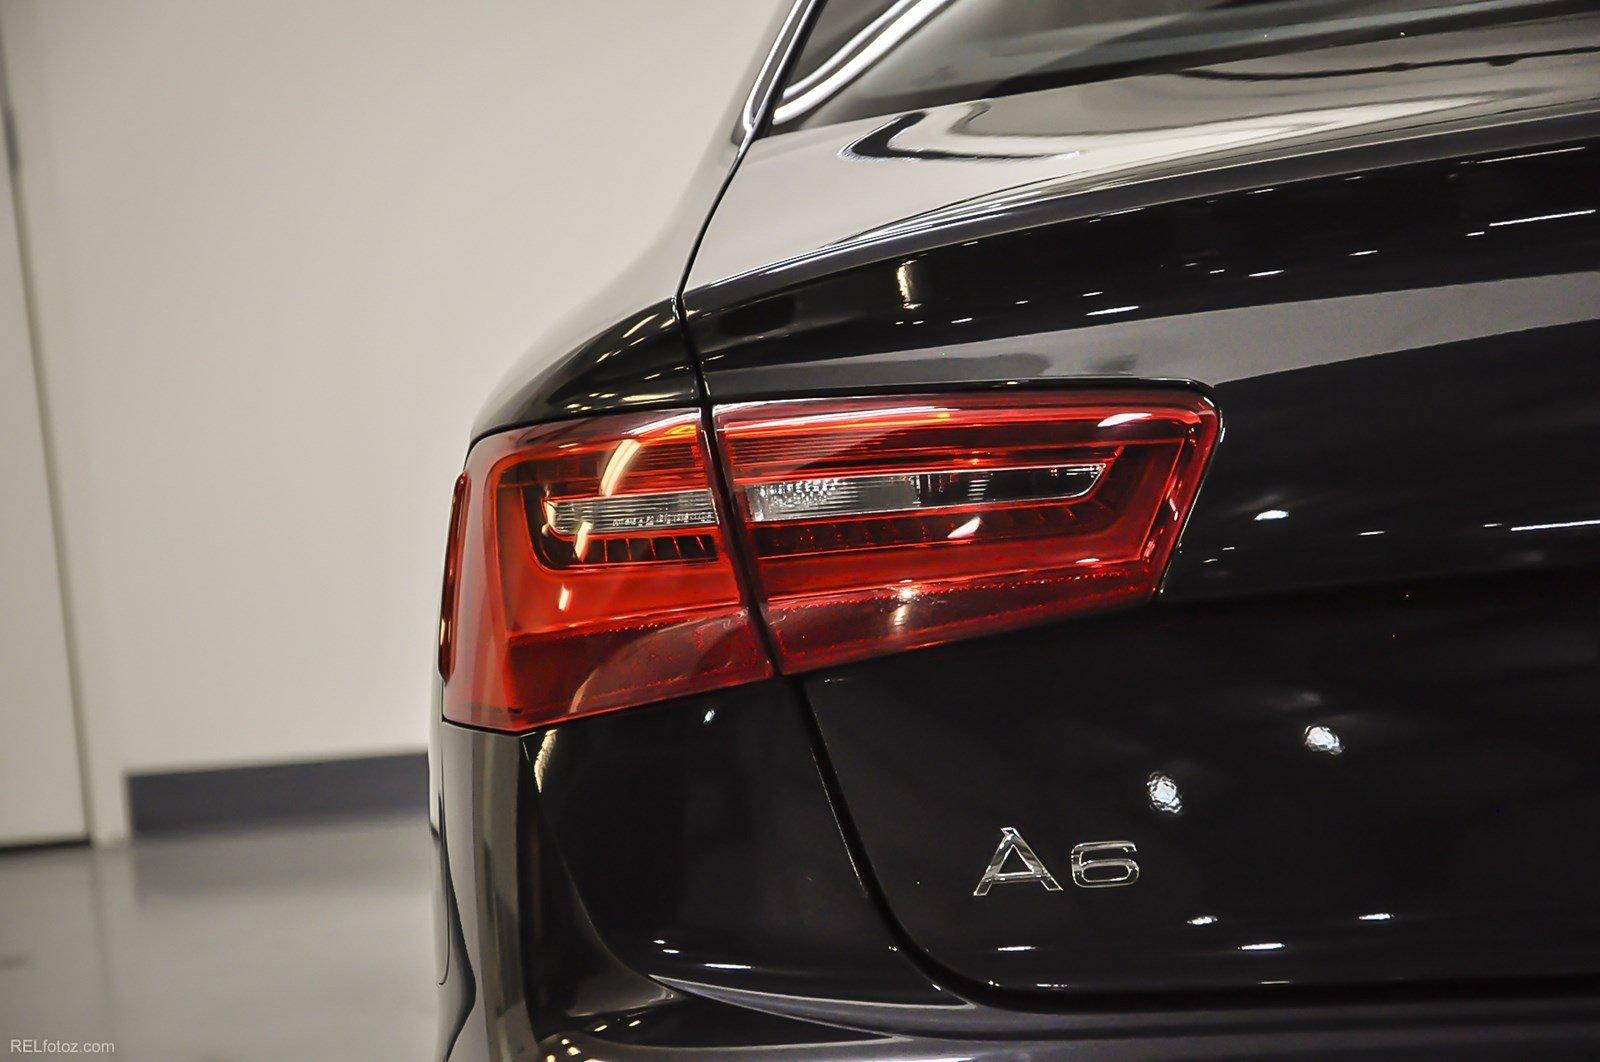 Used 2015 Audi A6 2.0T Premium Plus for sale Sold at Gravity Autos Marietta in Marietta GA 30060 6